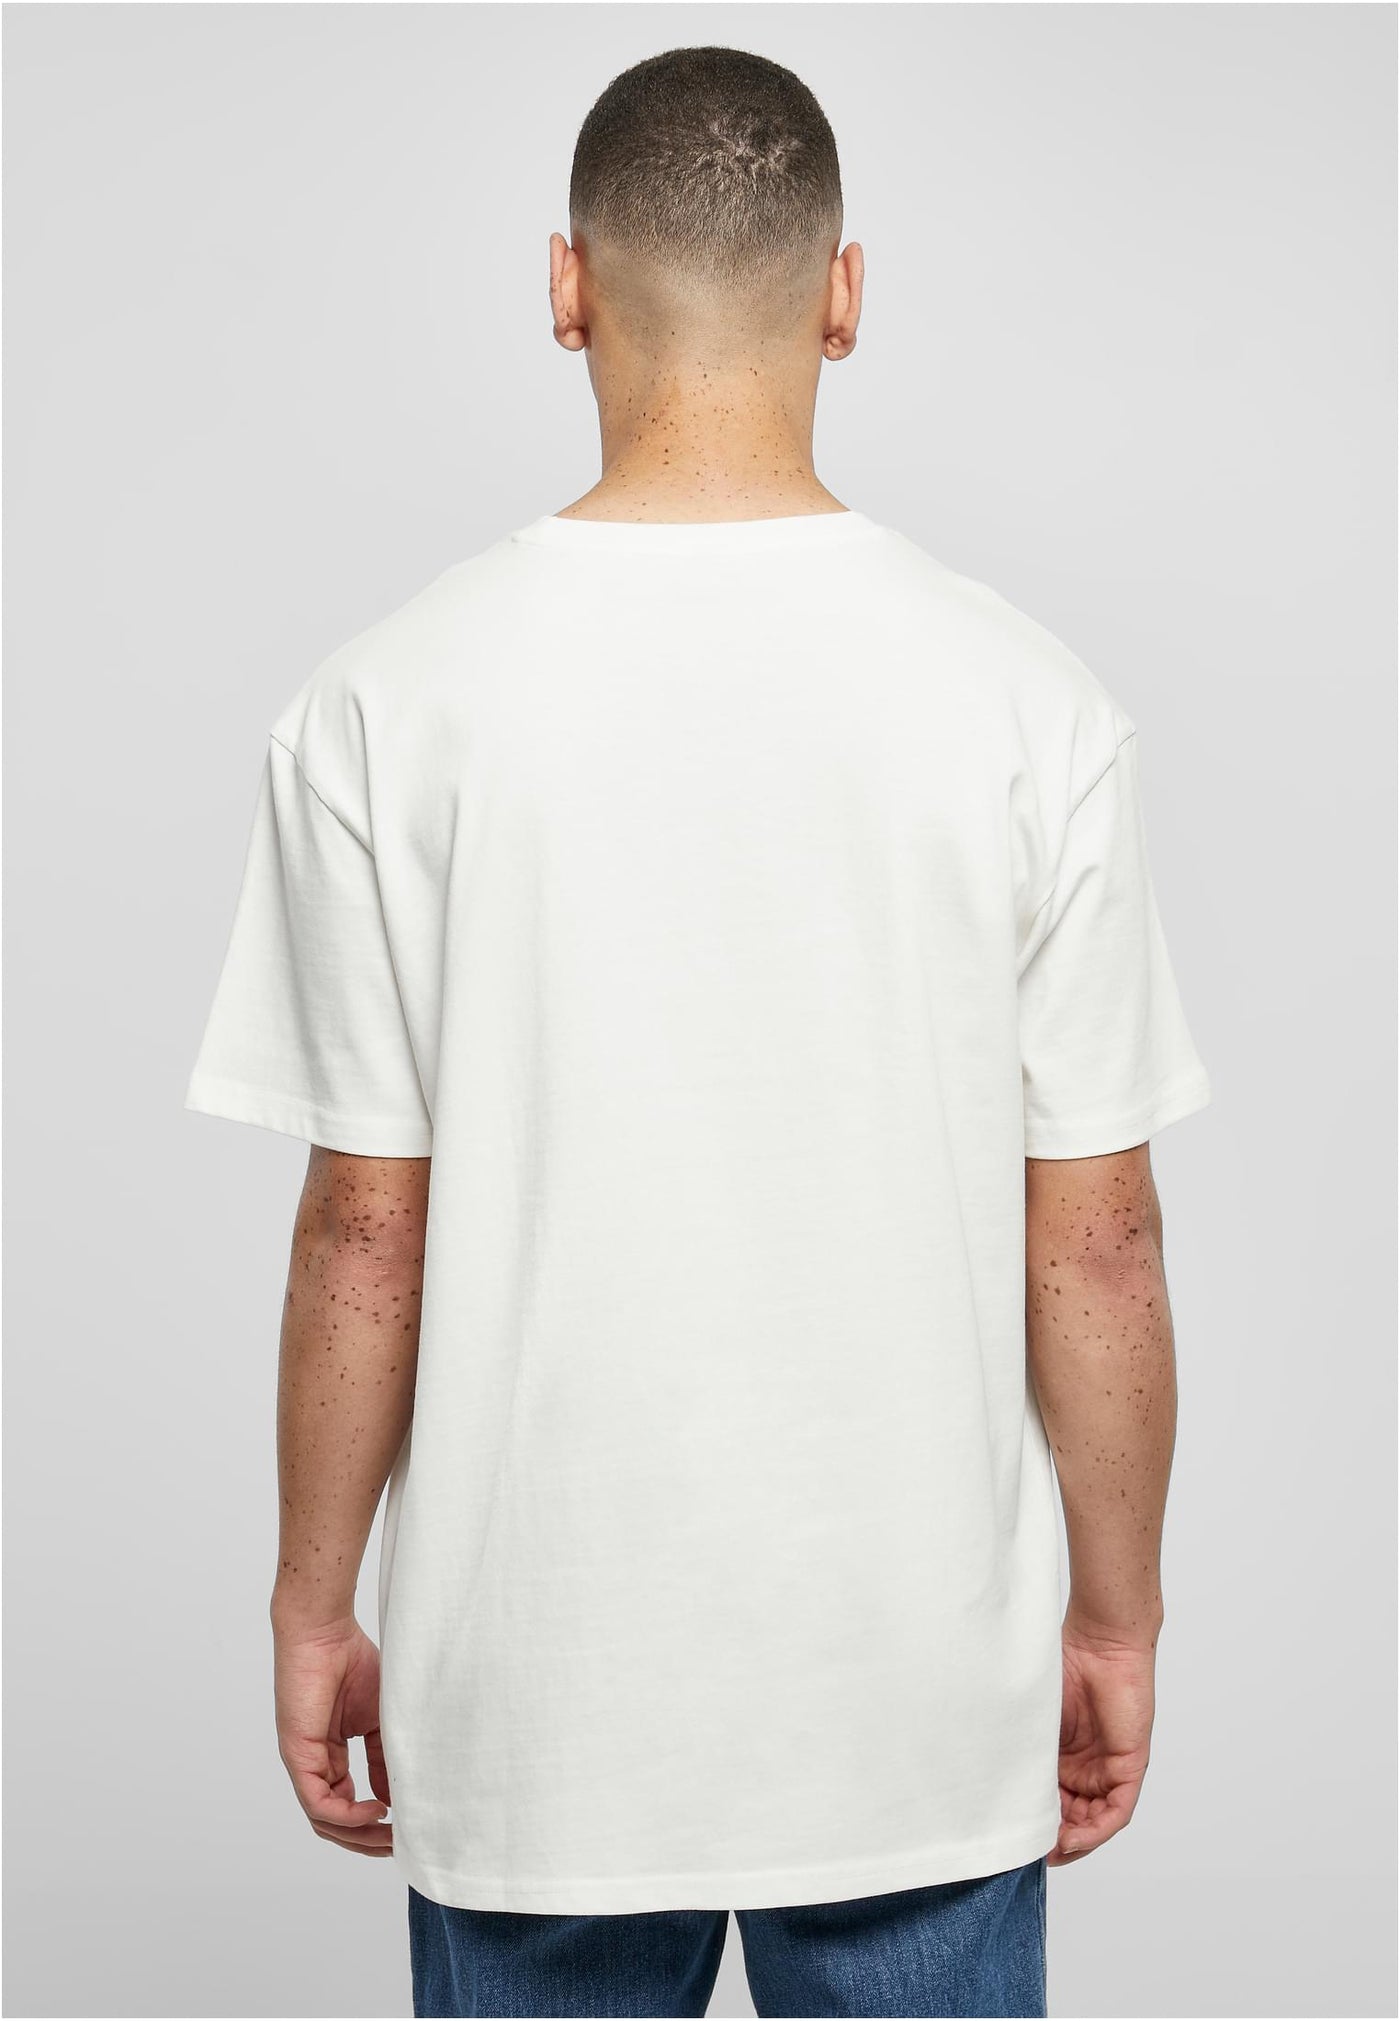 YO-C BY 102 Heavy Oversized Blank T-Shirt - Blanc White